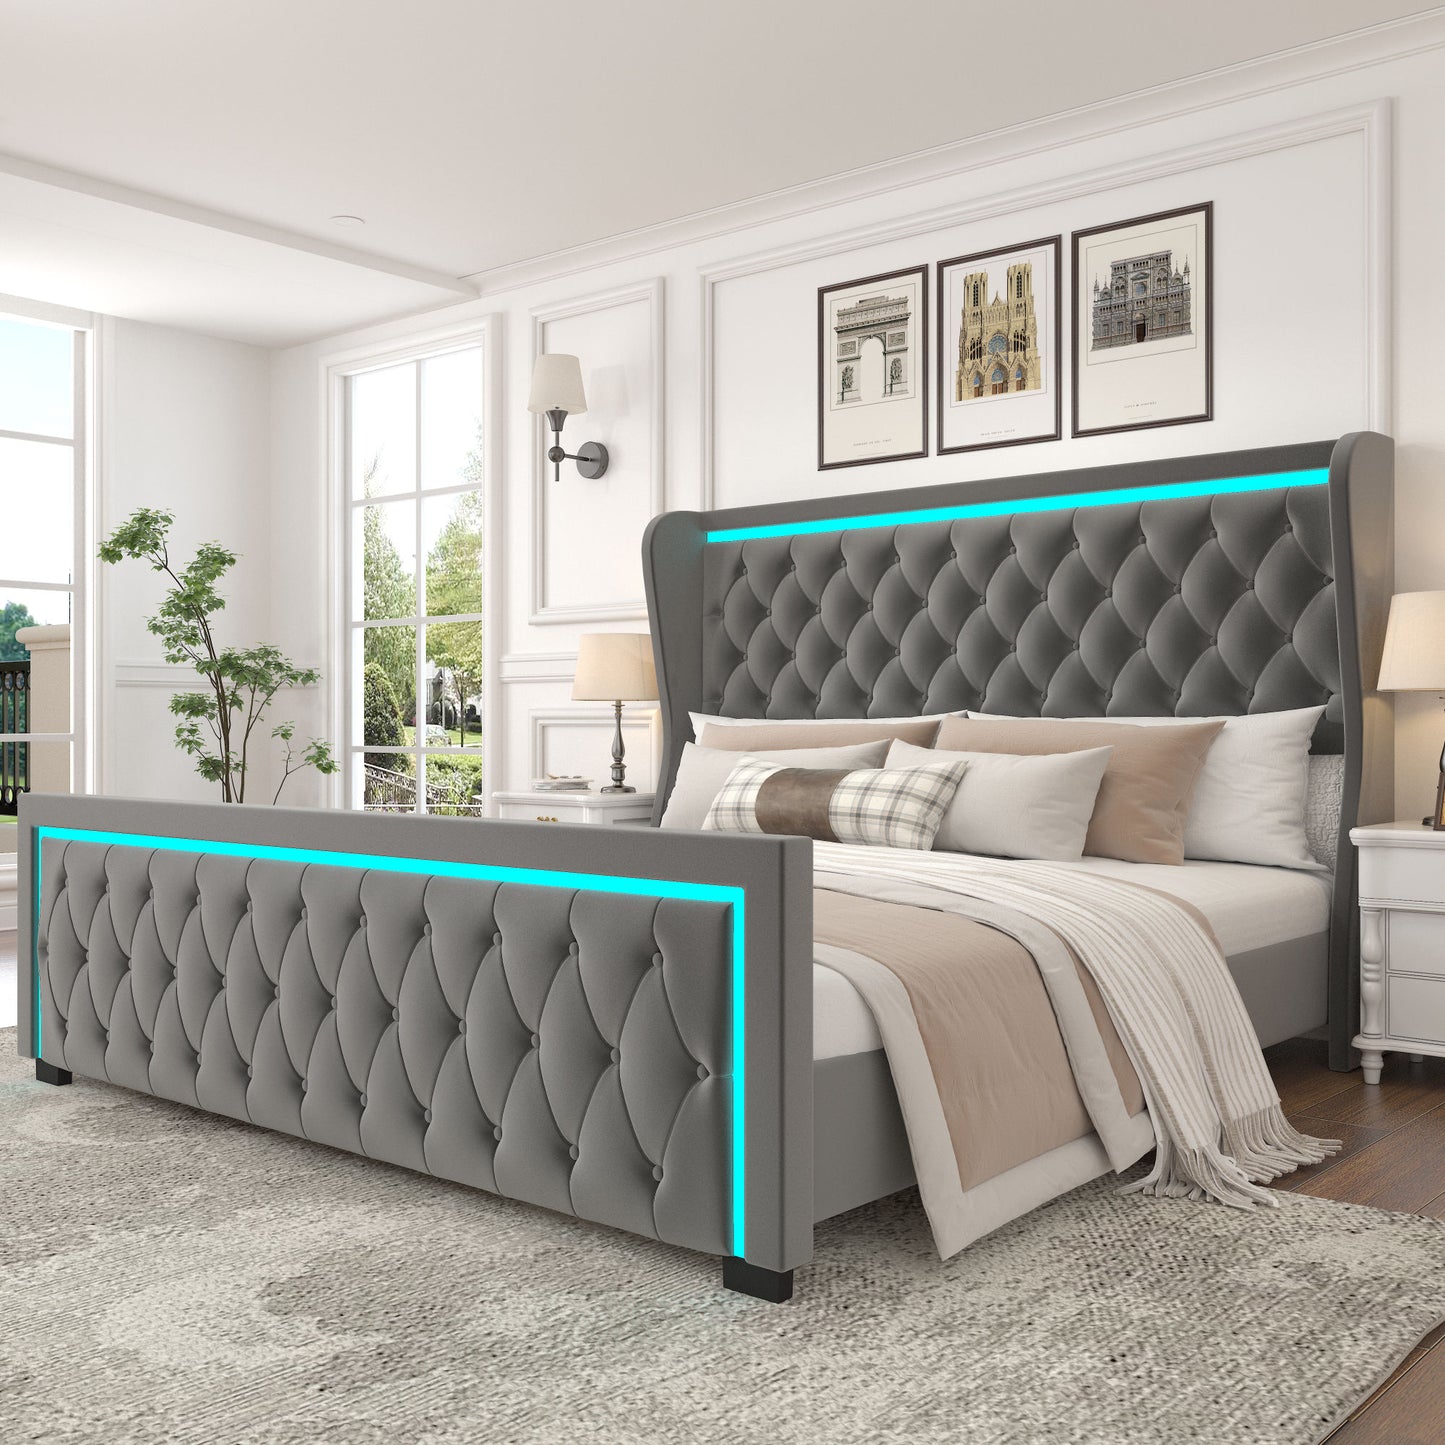 velvet upholstered bed with adjustable colorful led light decorative headboard